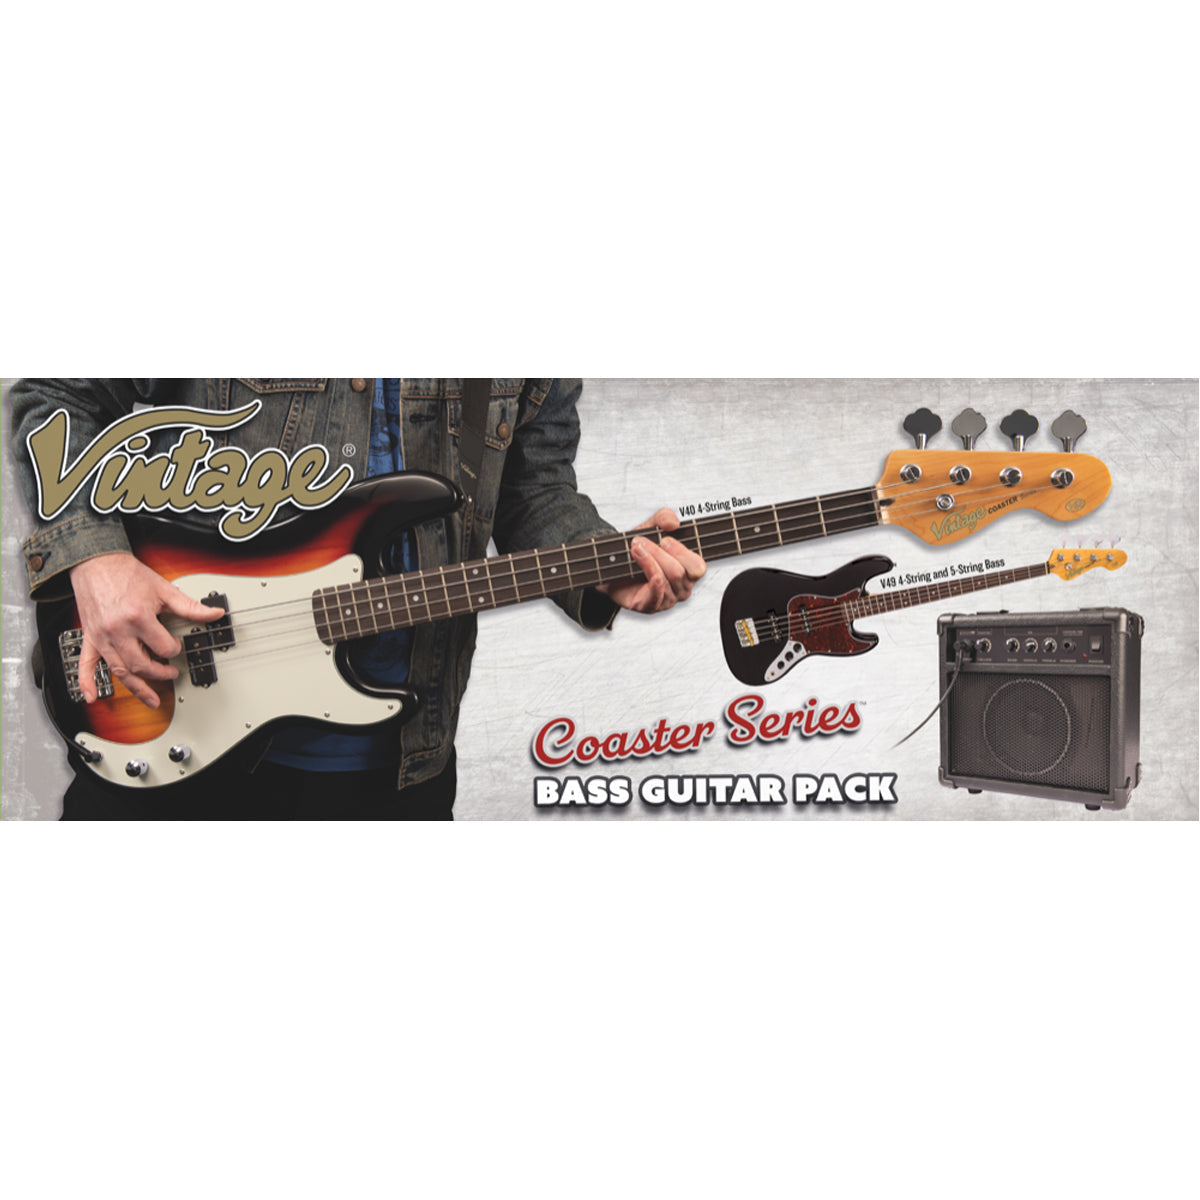 Vintage V40 Coaster Series Bass Guitar Pack ~ Candy Apple Blue, Bass Guitar Packs for sale at Richards Guitars.